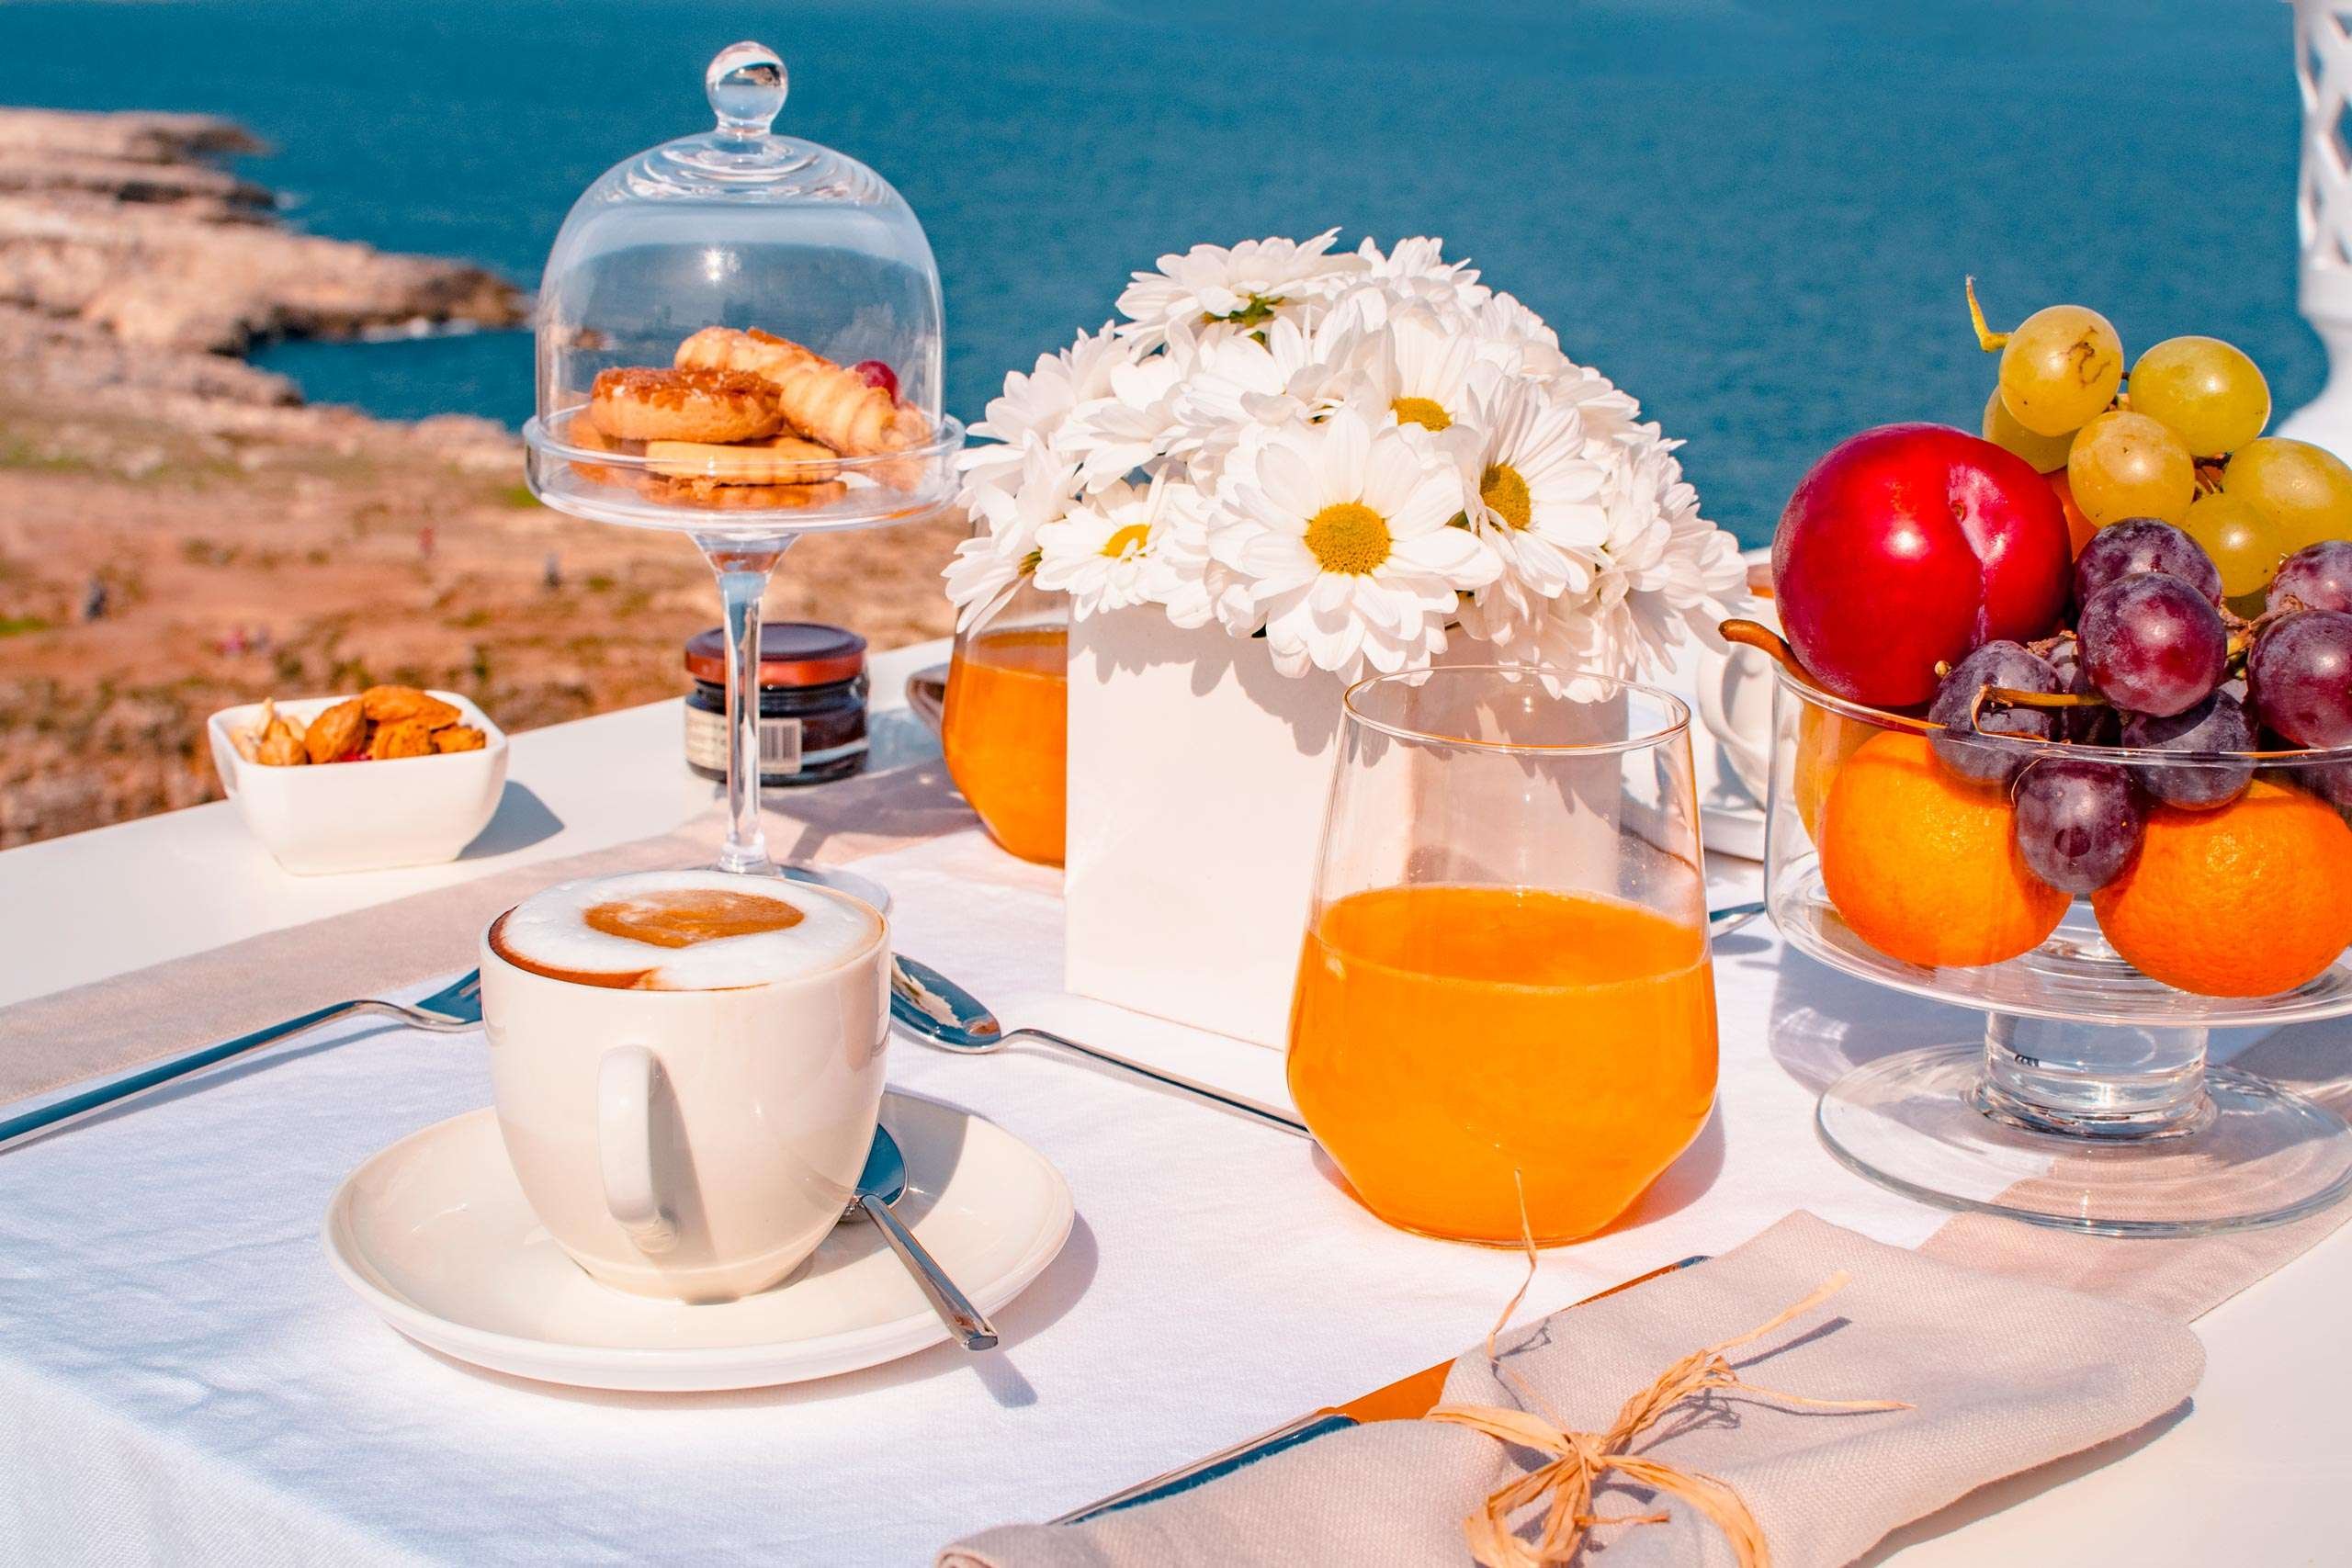 Завтрак у моря